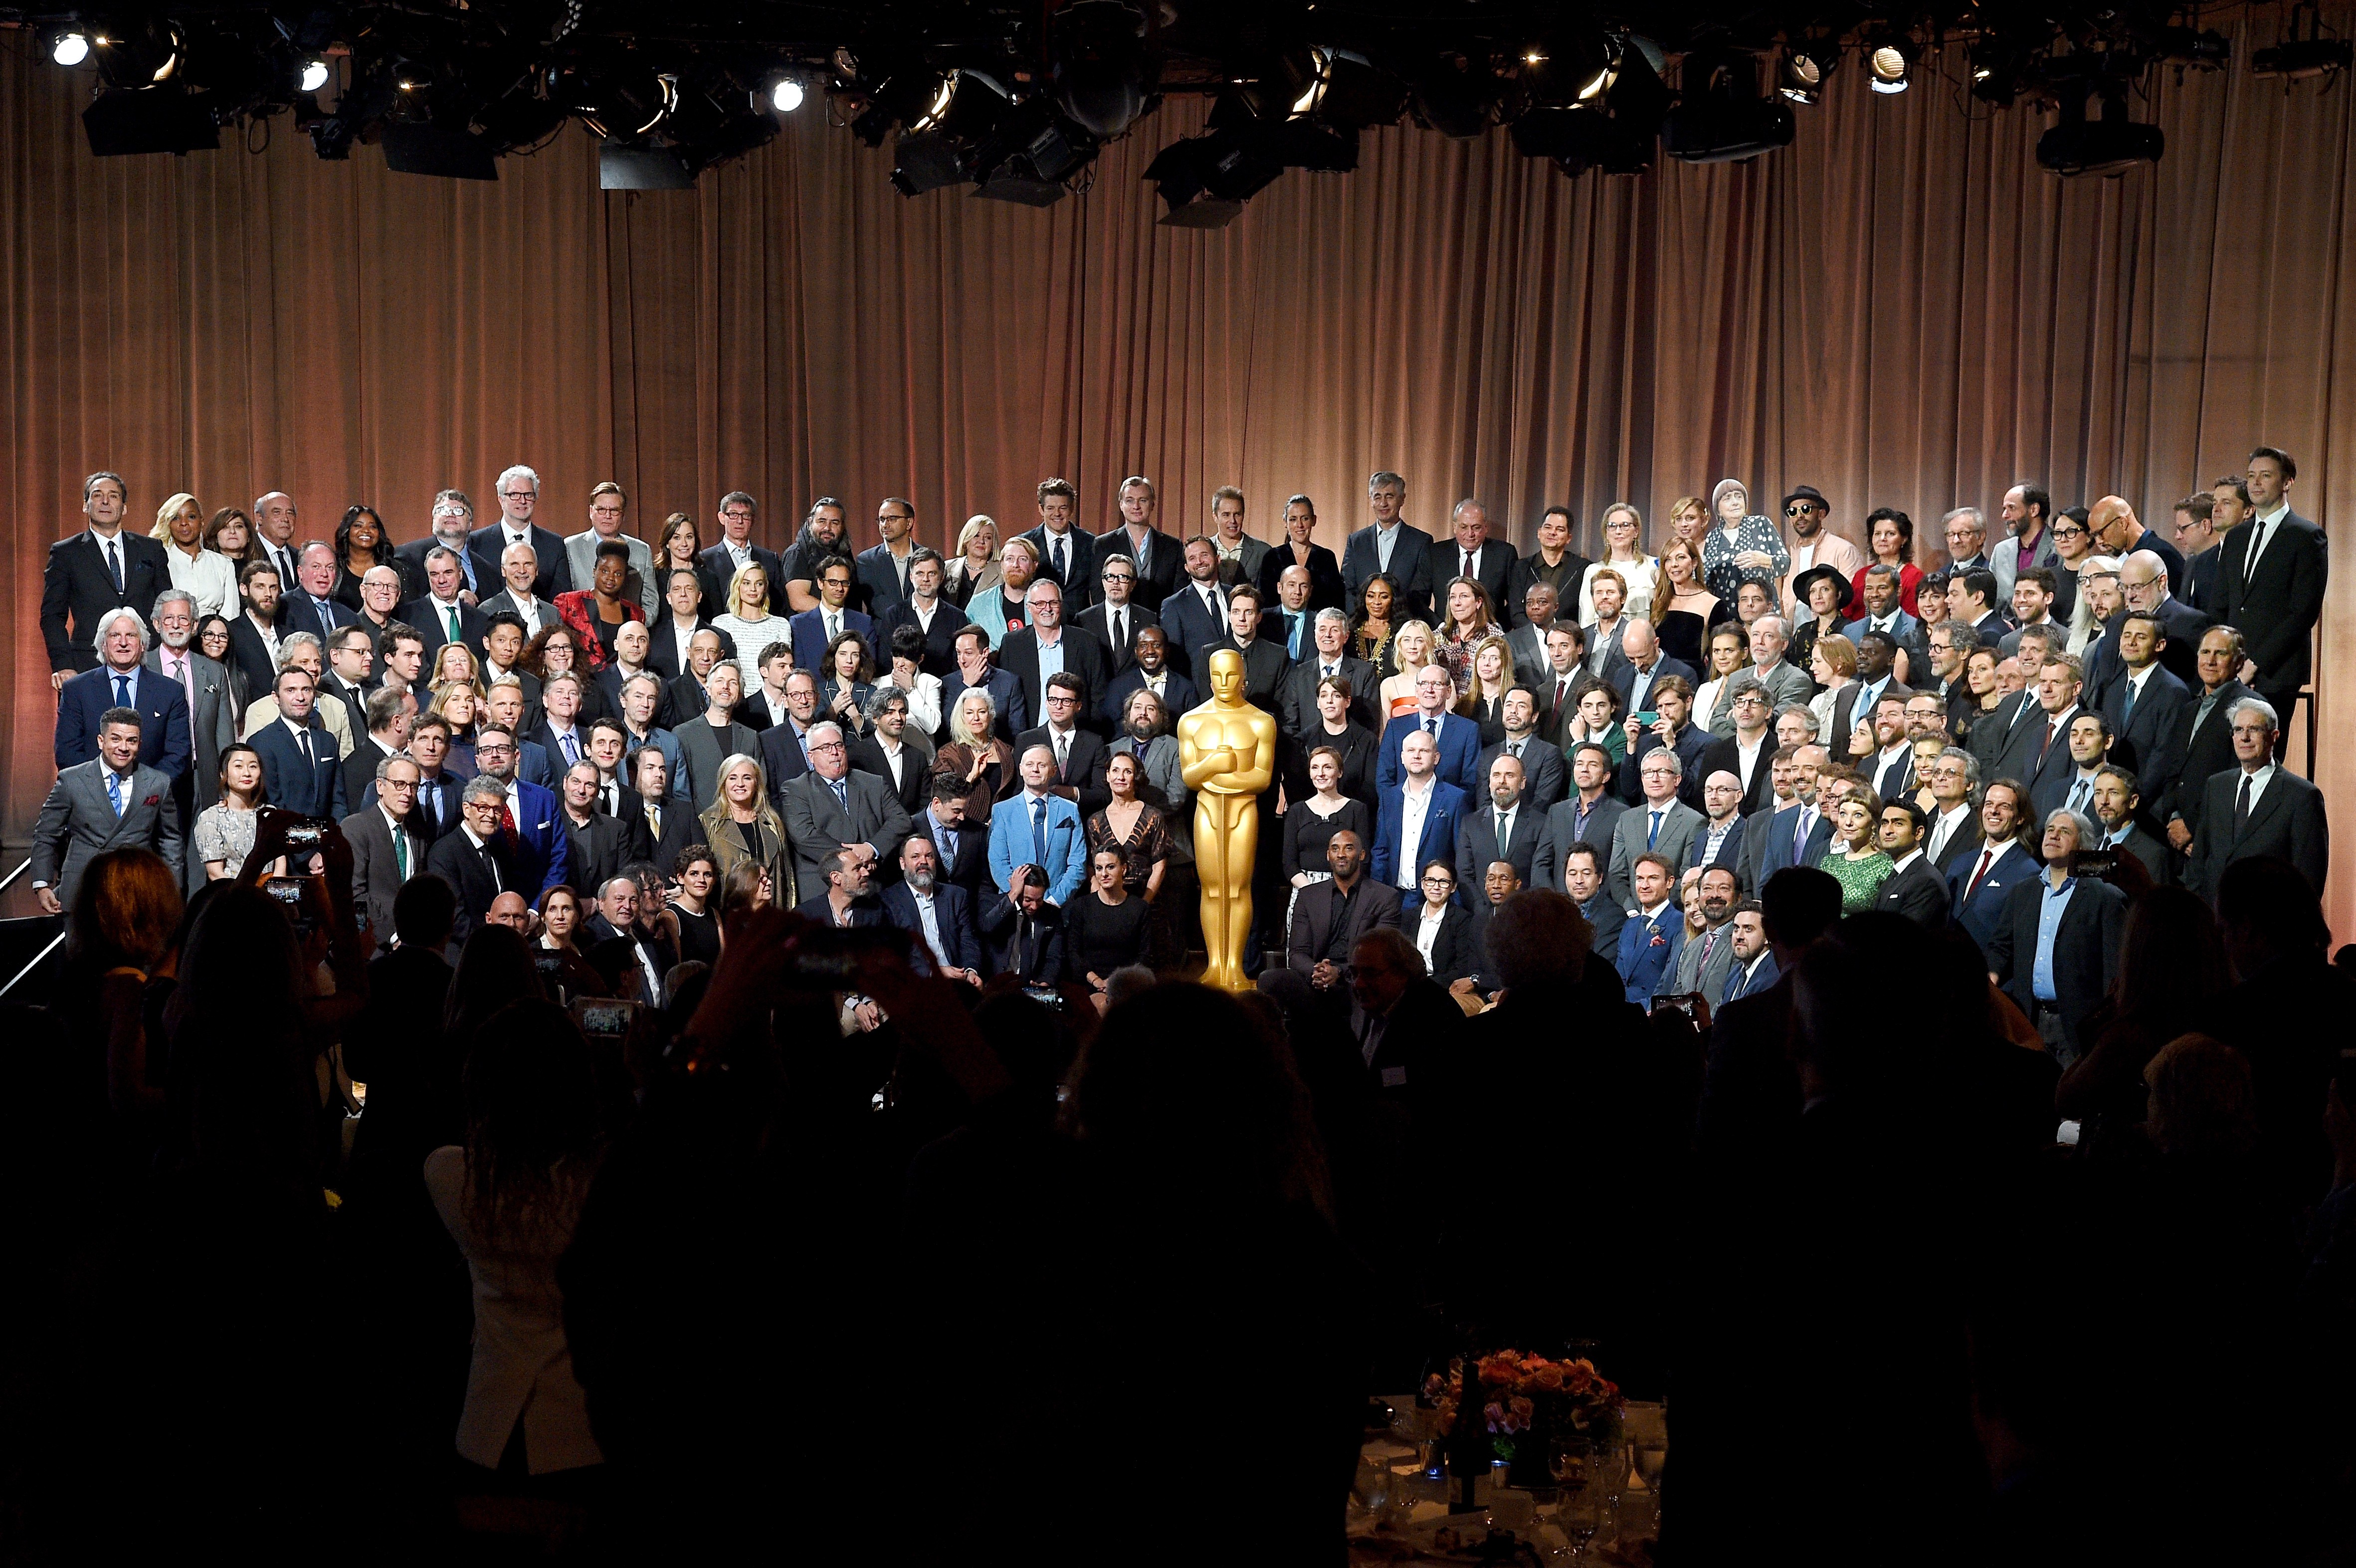 Indicados ao Oscar 2018 (Foto: Getty Images)